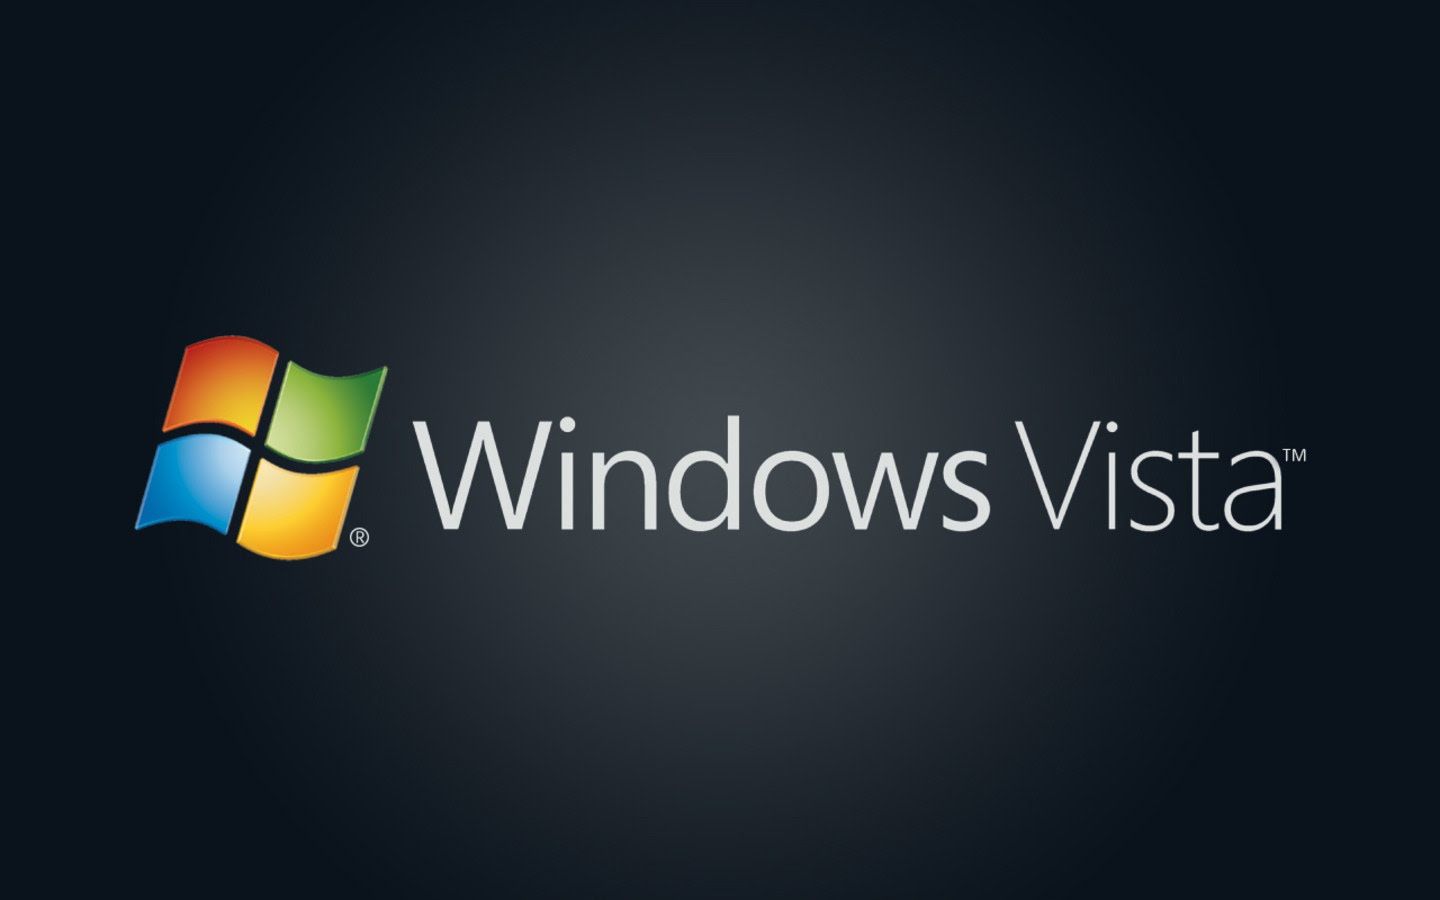 Free windows media player download for vista